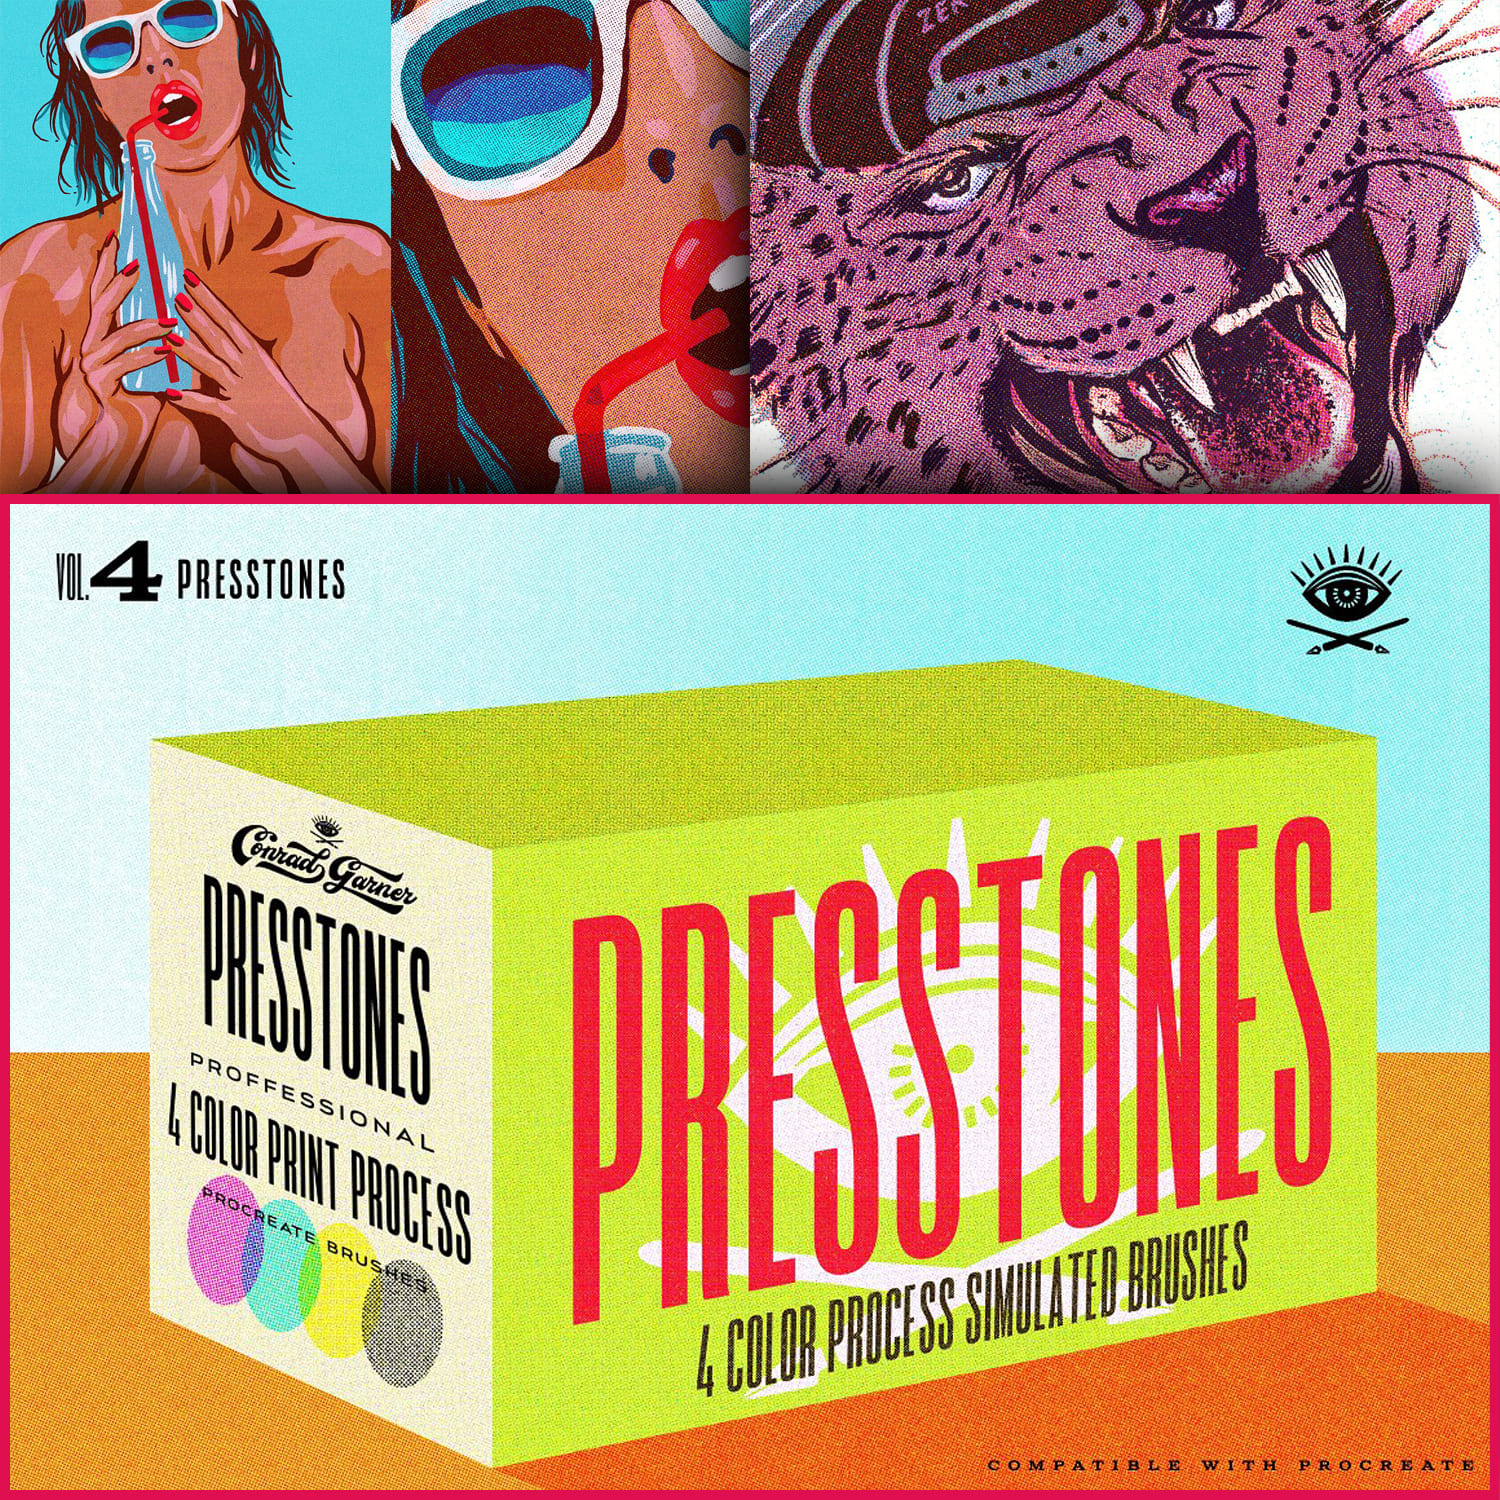 Presstones - Procreate Brush Set by Conrad Garner Studios.